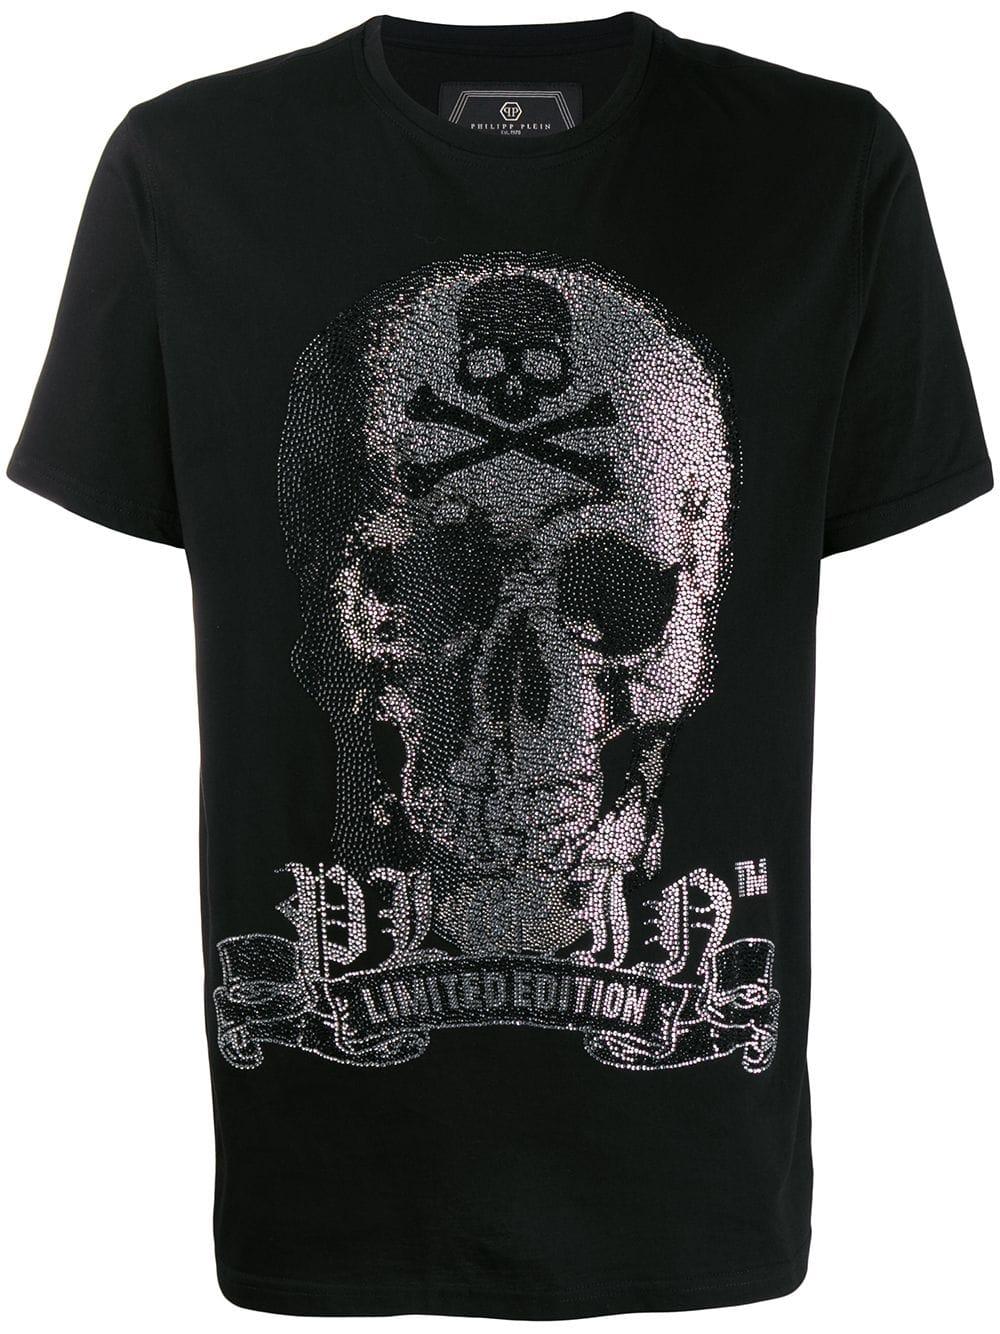 Philipp Plein Platinum Cut Skull T-shirt in Black for Men - Lyst